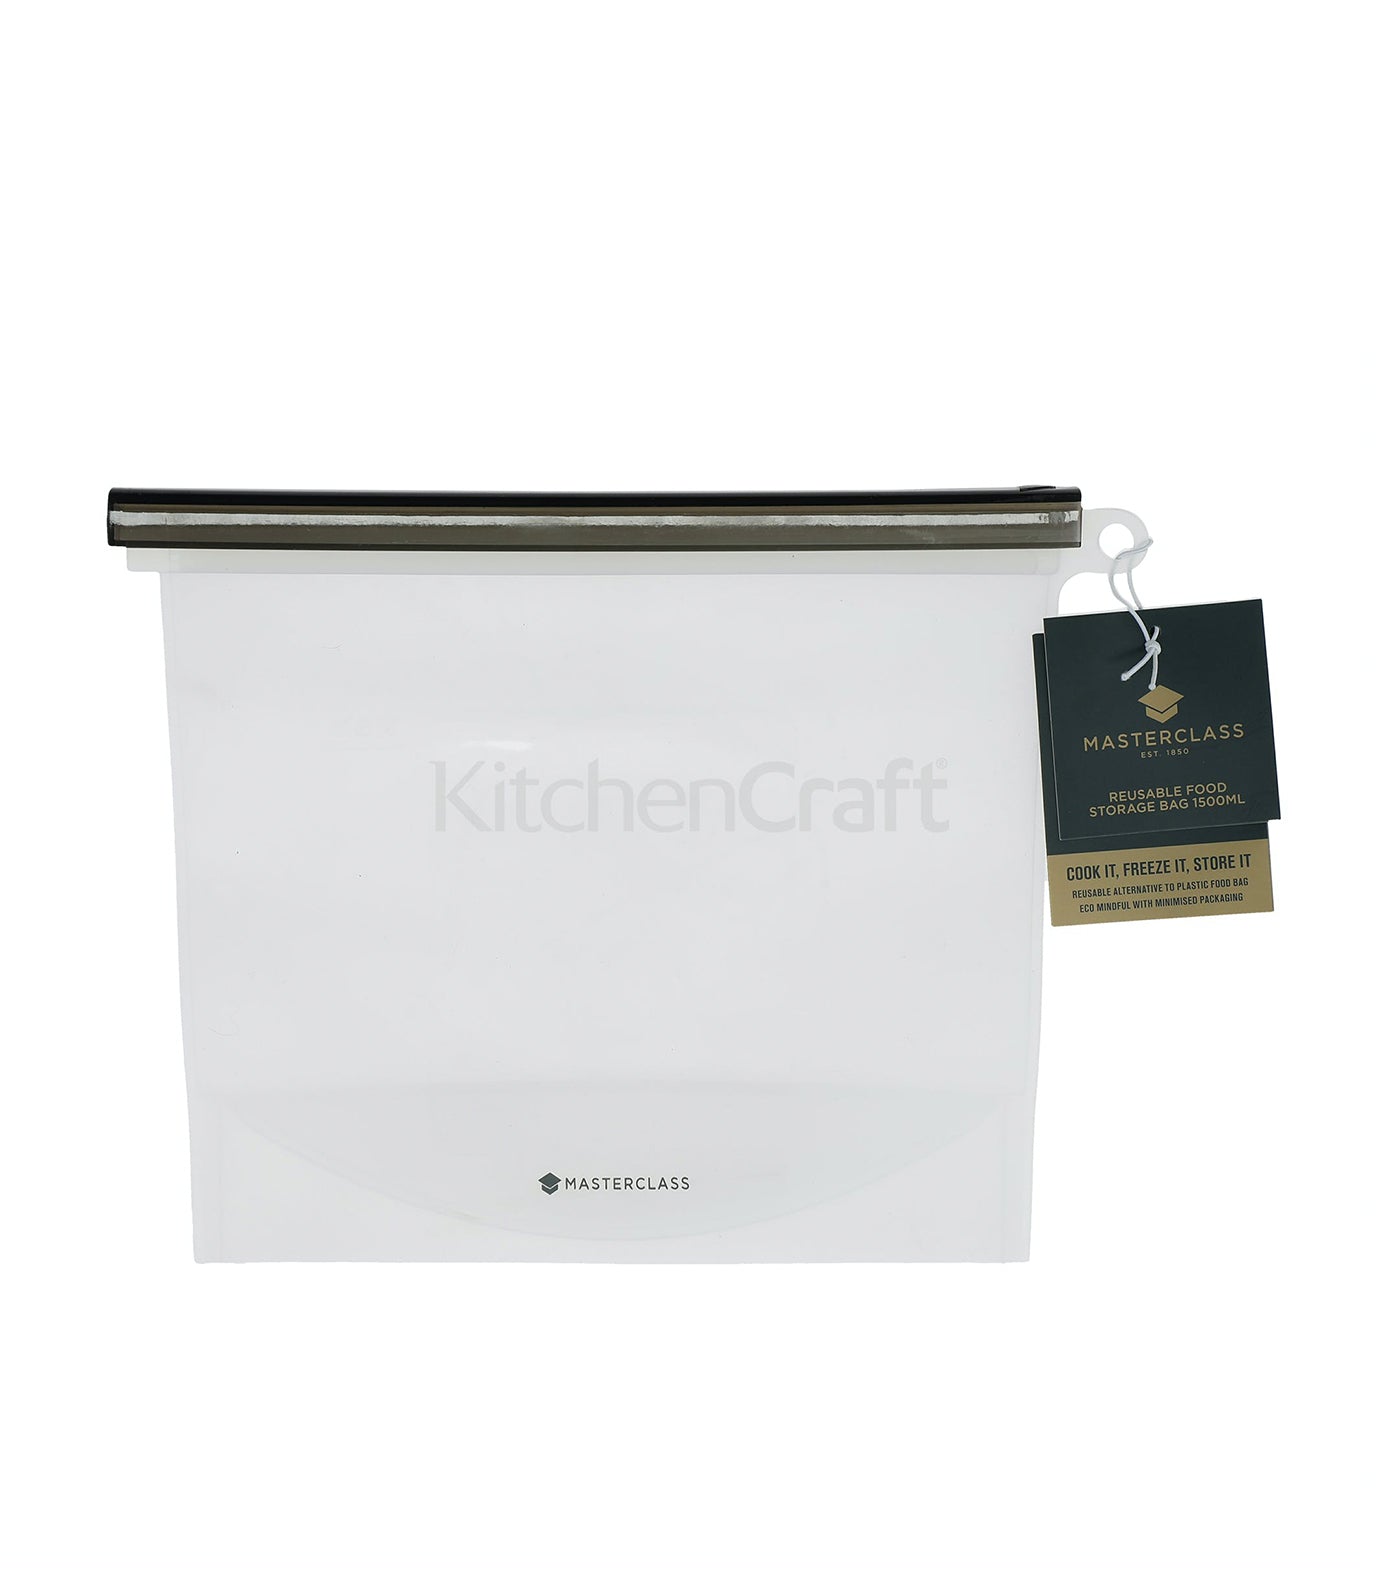 kitchencraft 1500ml masterclass reusable silicone food bag